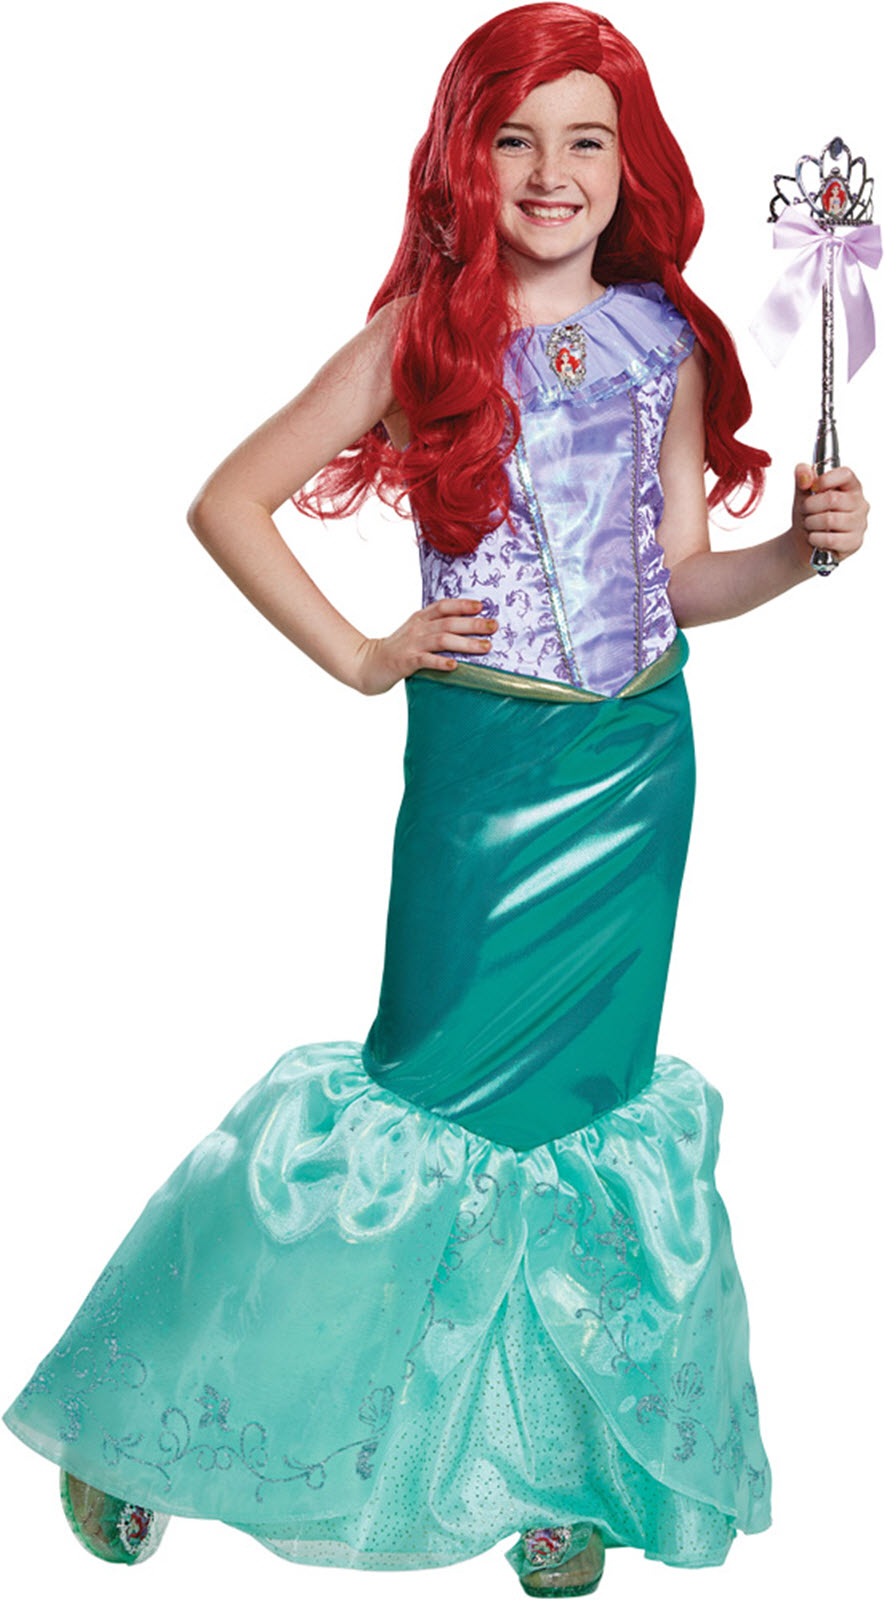 Girl's Ariel Deluxe Costume - The Little Mermaid